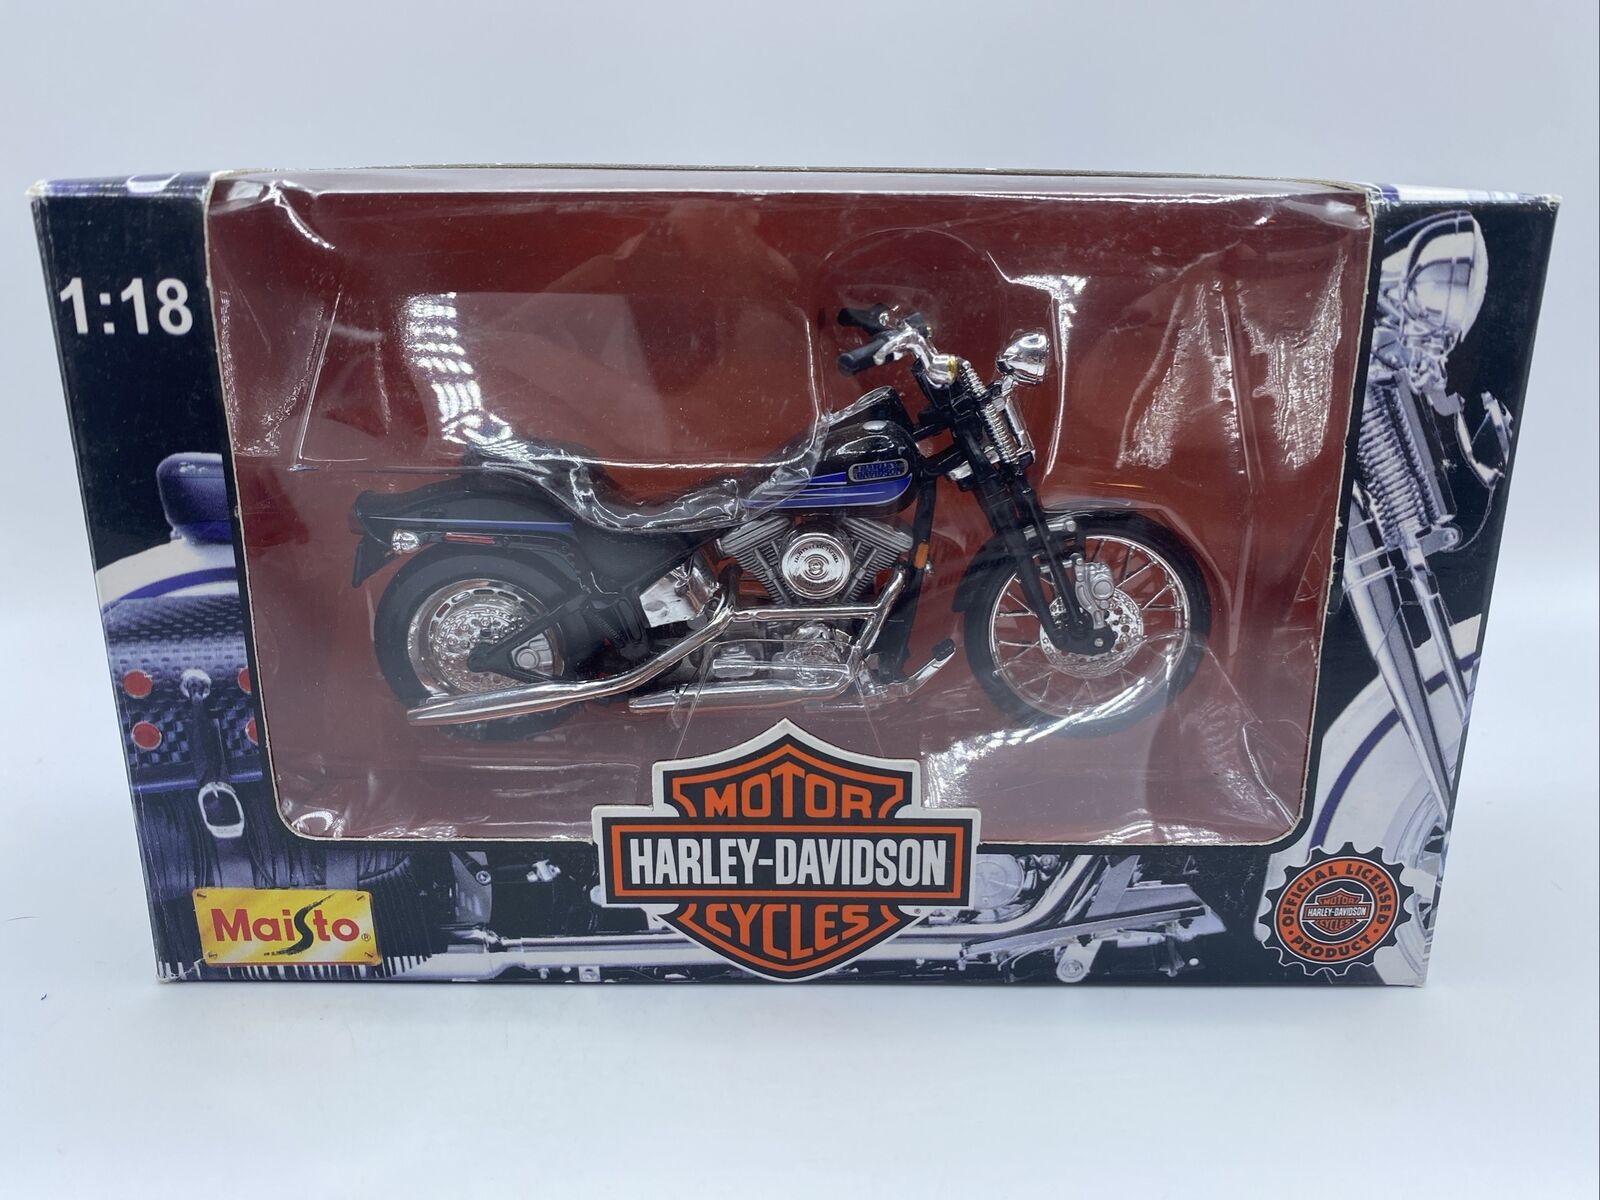 Harley Davidson Motorcycle Bad Boy FXSTSB 1:18 scale Maisto